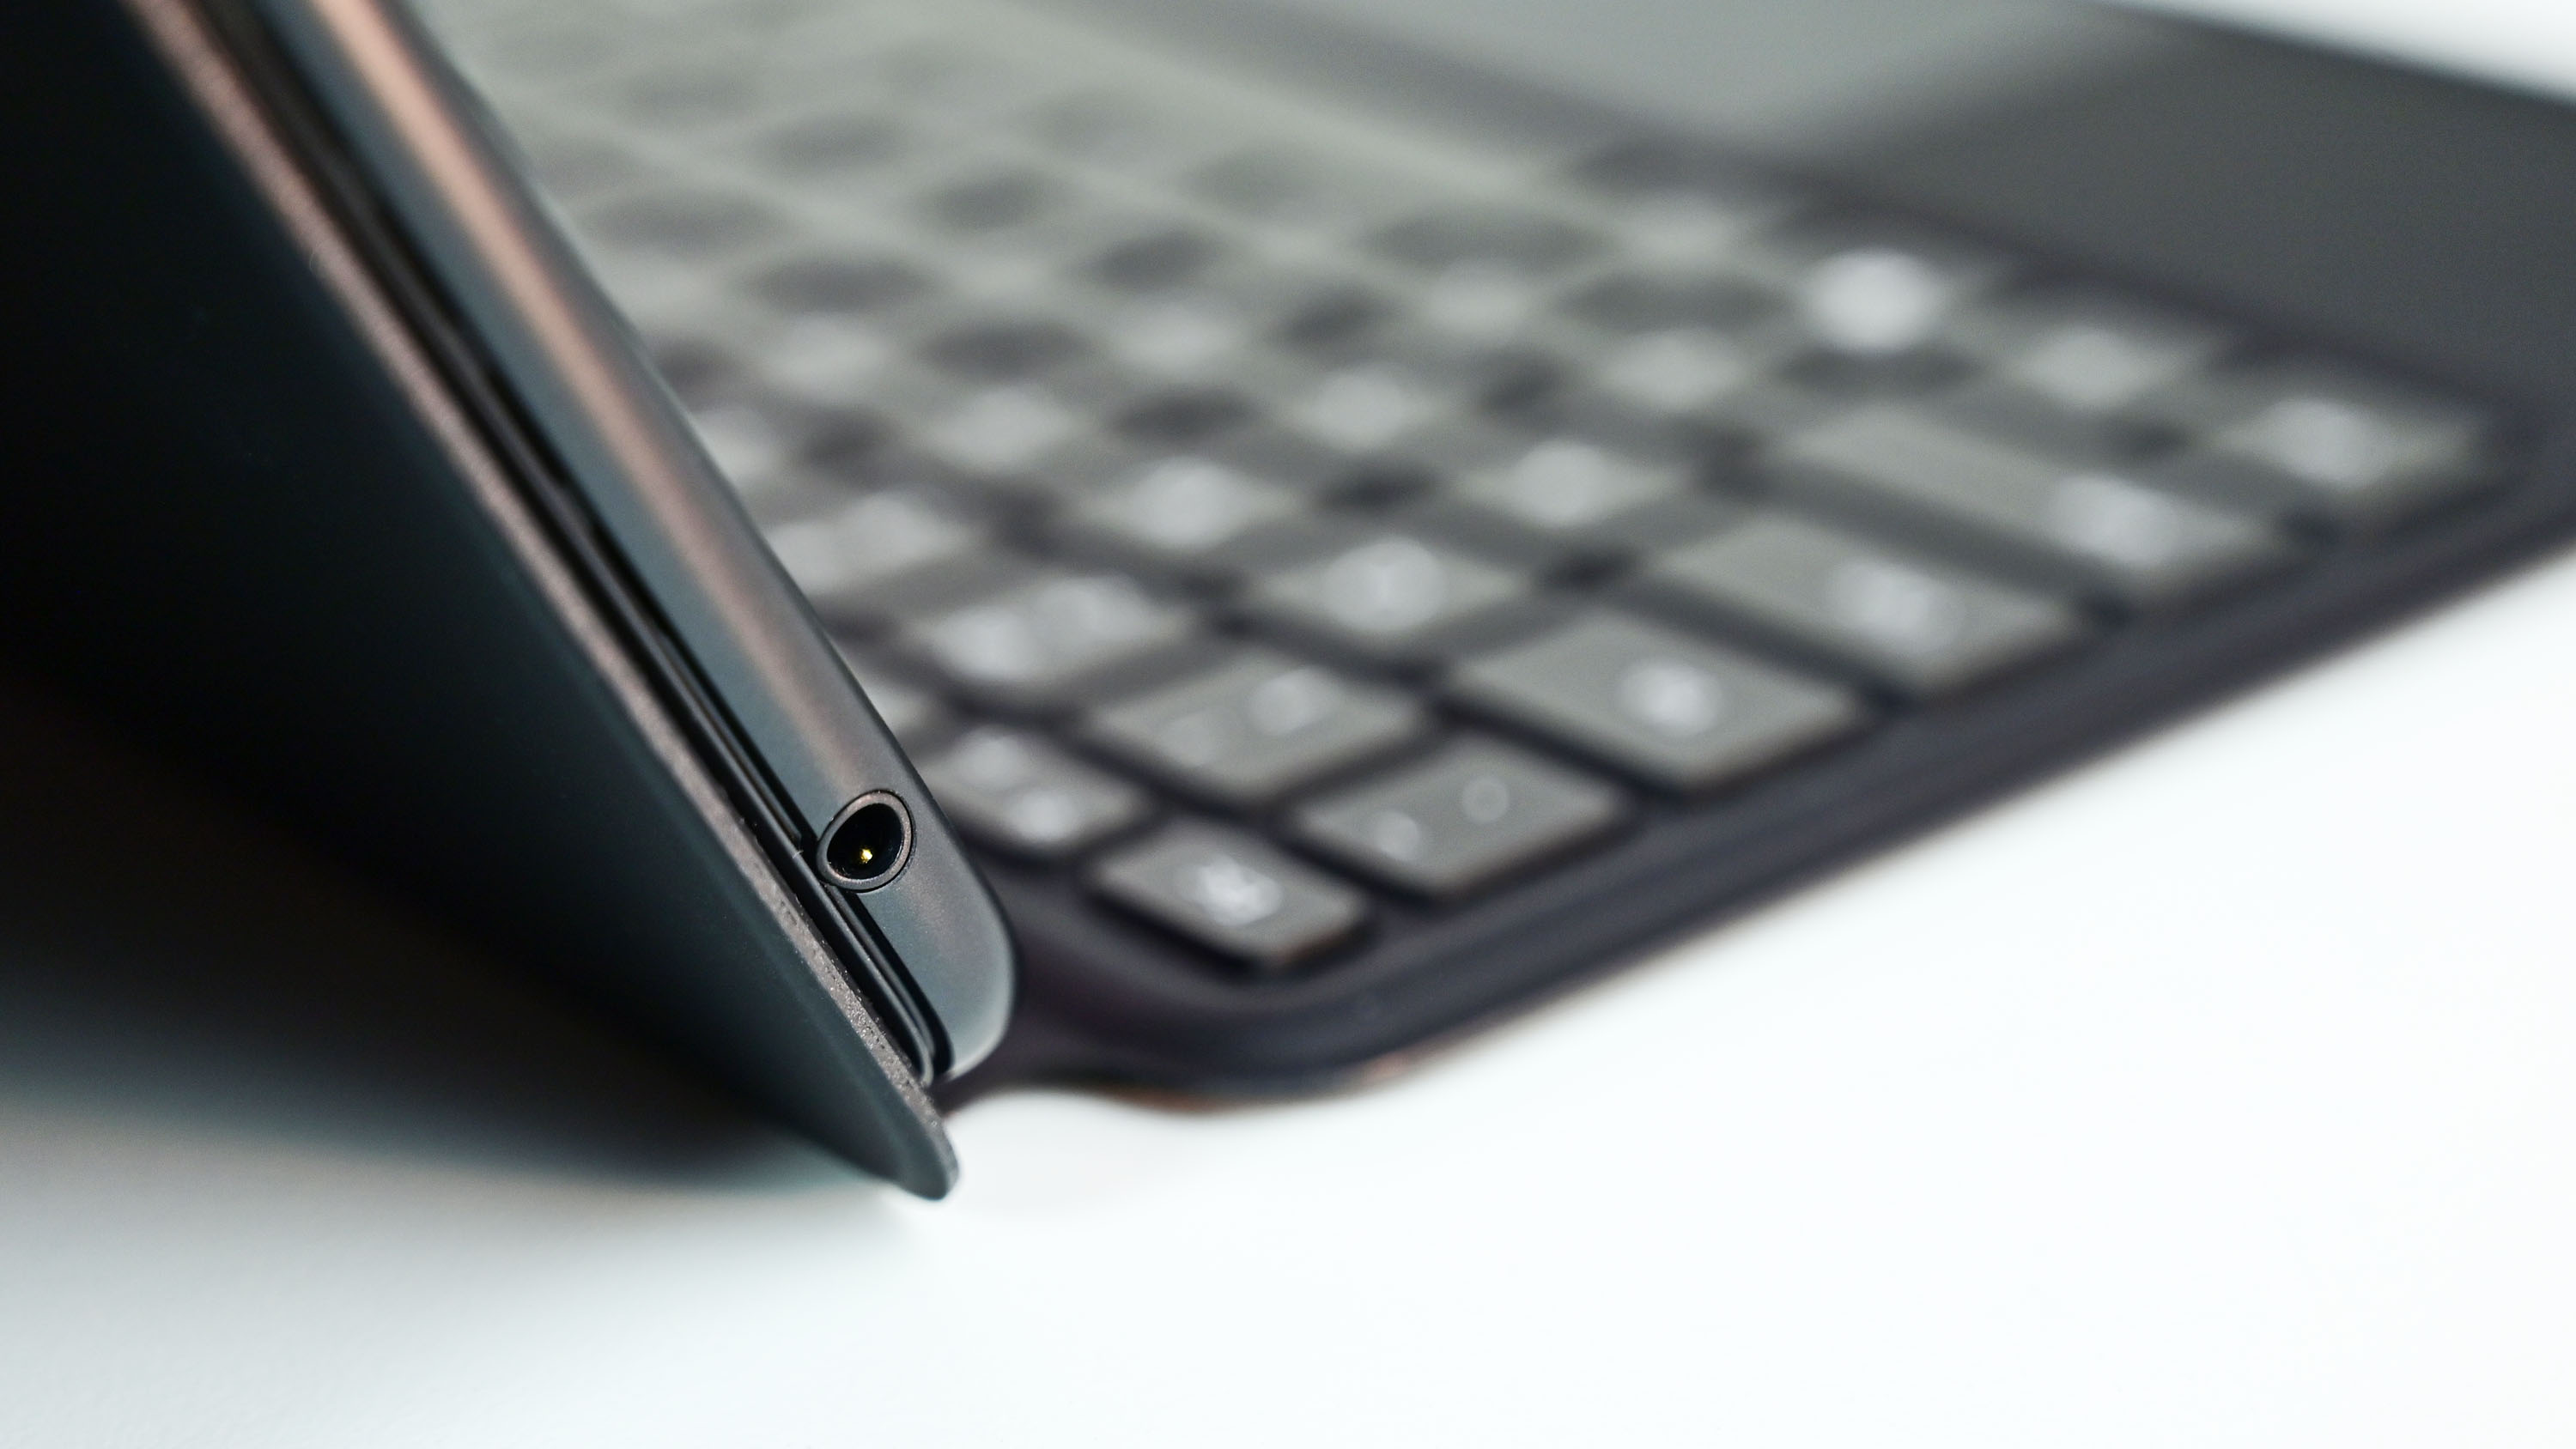 Huawei MateBook E with keyboard cover